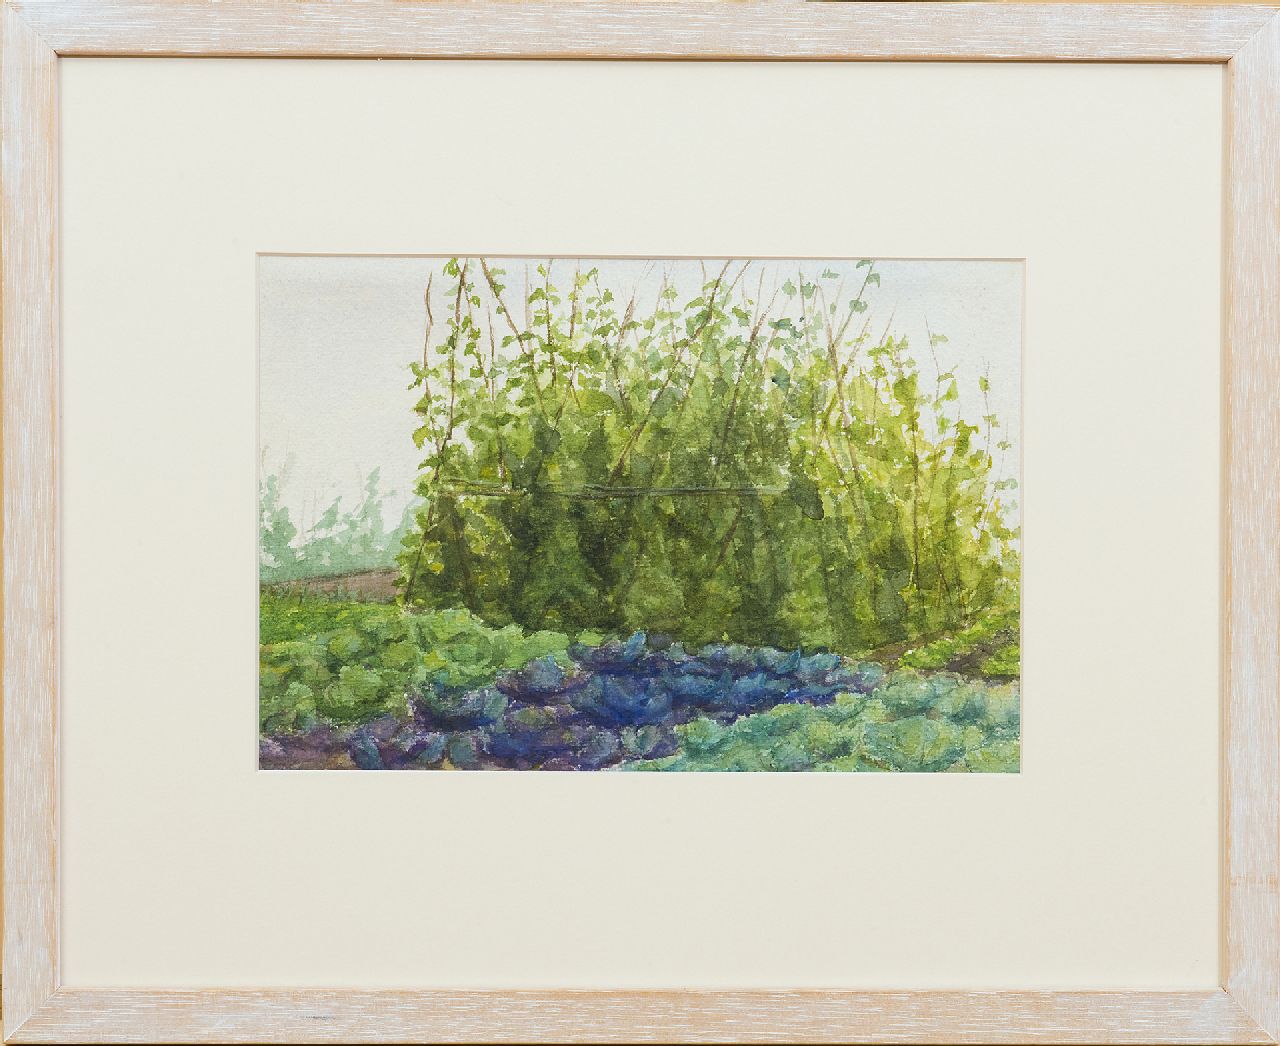 Fritzlin M.C.L.  | Maria Charlotta 'Louise' Fritzlin, Gemüsegarten, Aquarell auf Papier 18,7 x 27,6 cm, datiert '97 im Verso